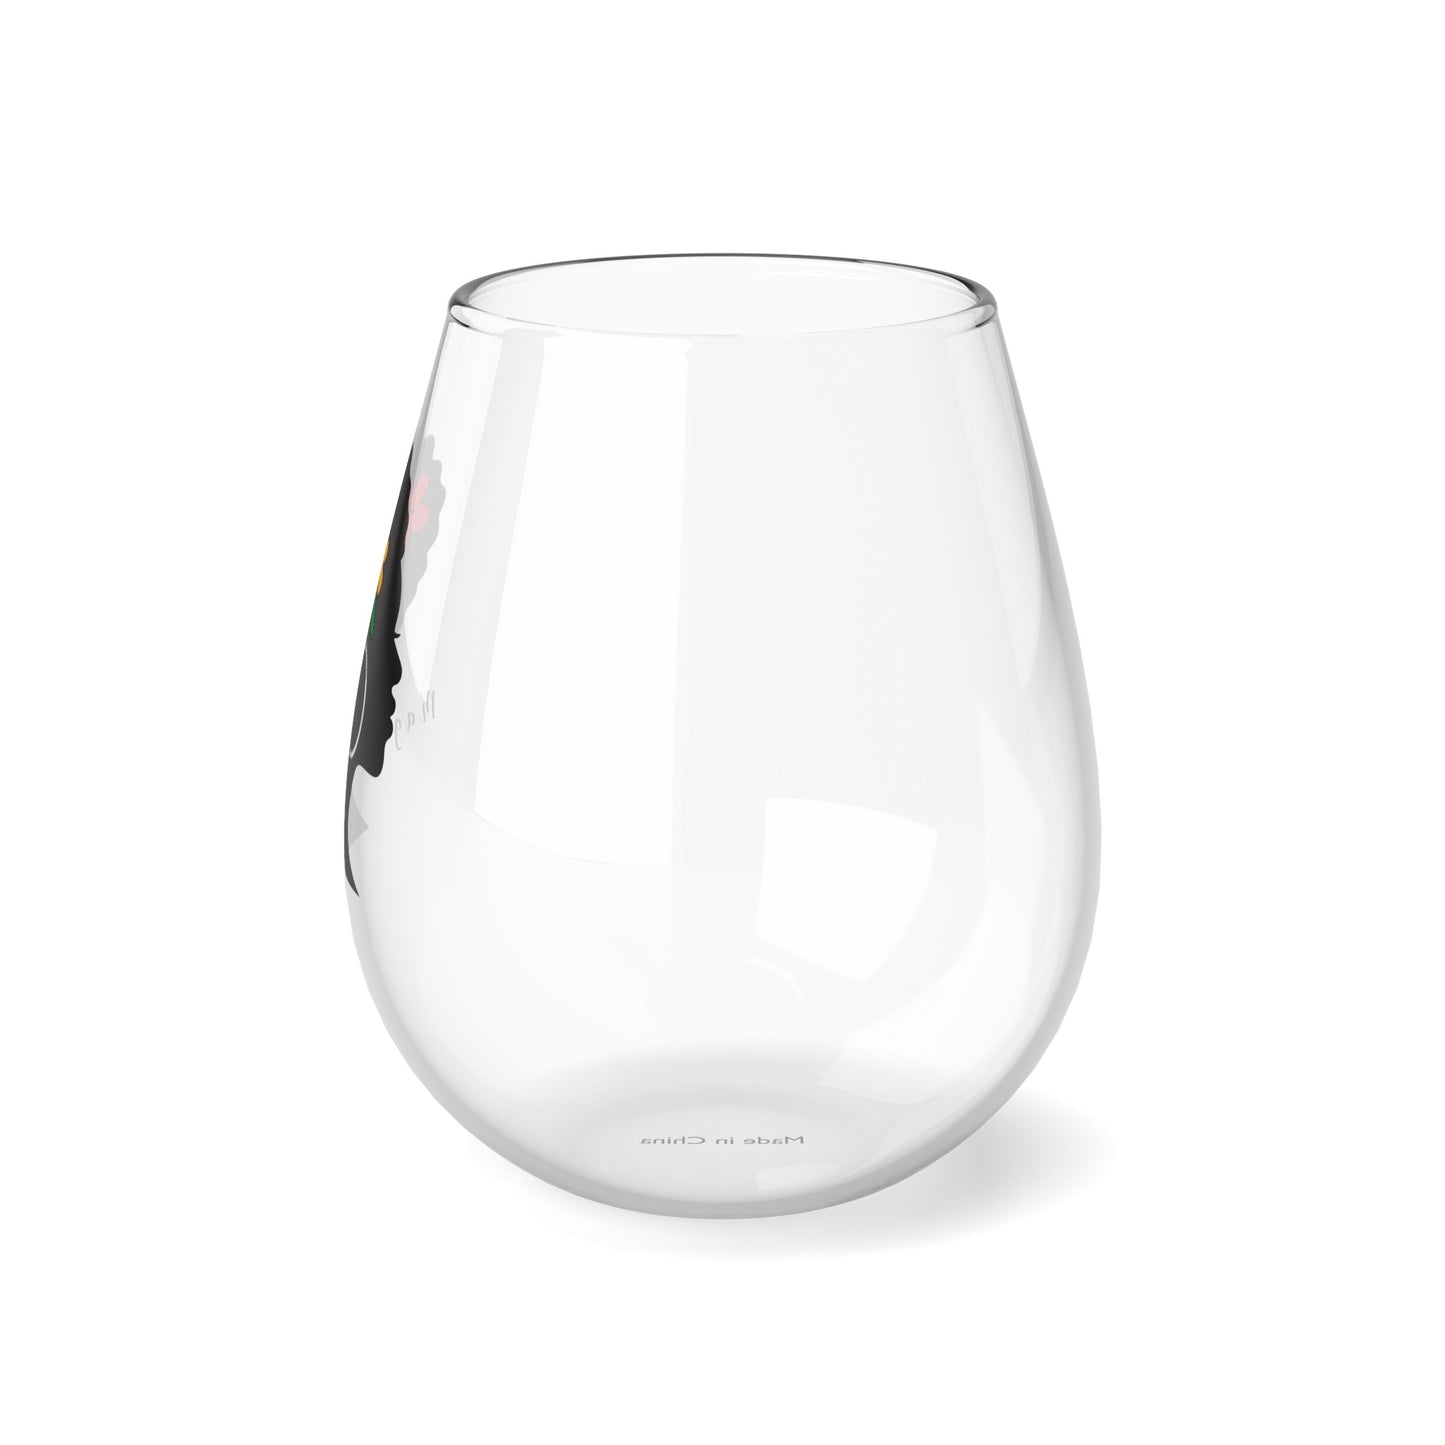 Magical/ Stemless Wine Glass, 11.75oz